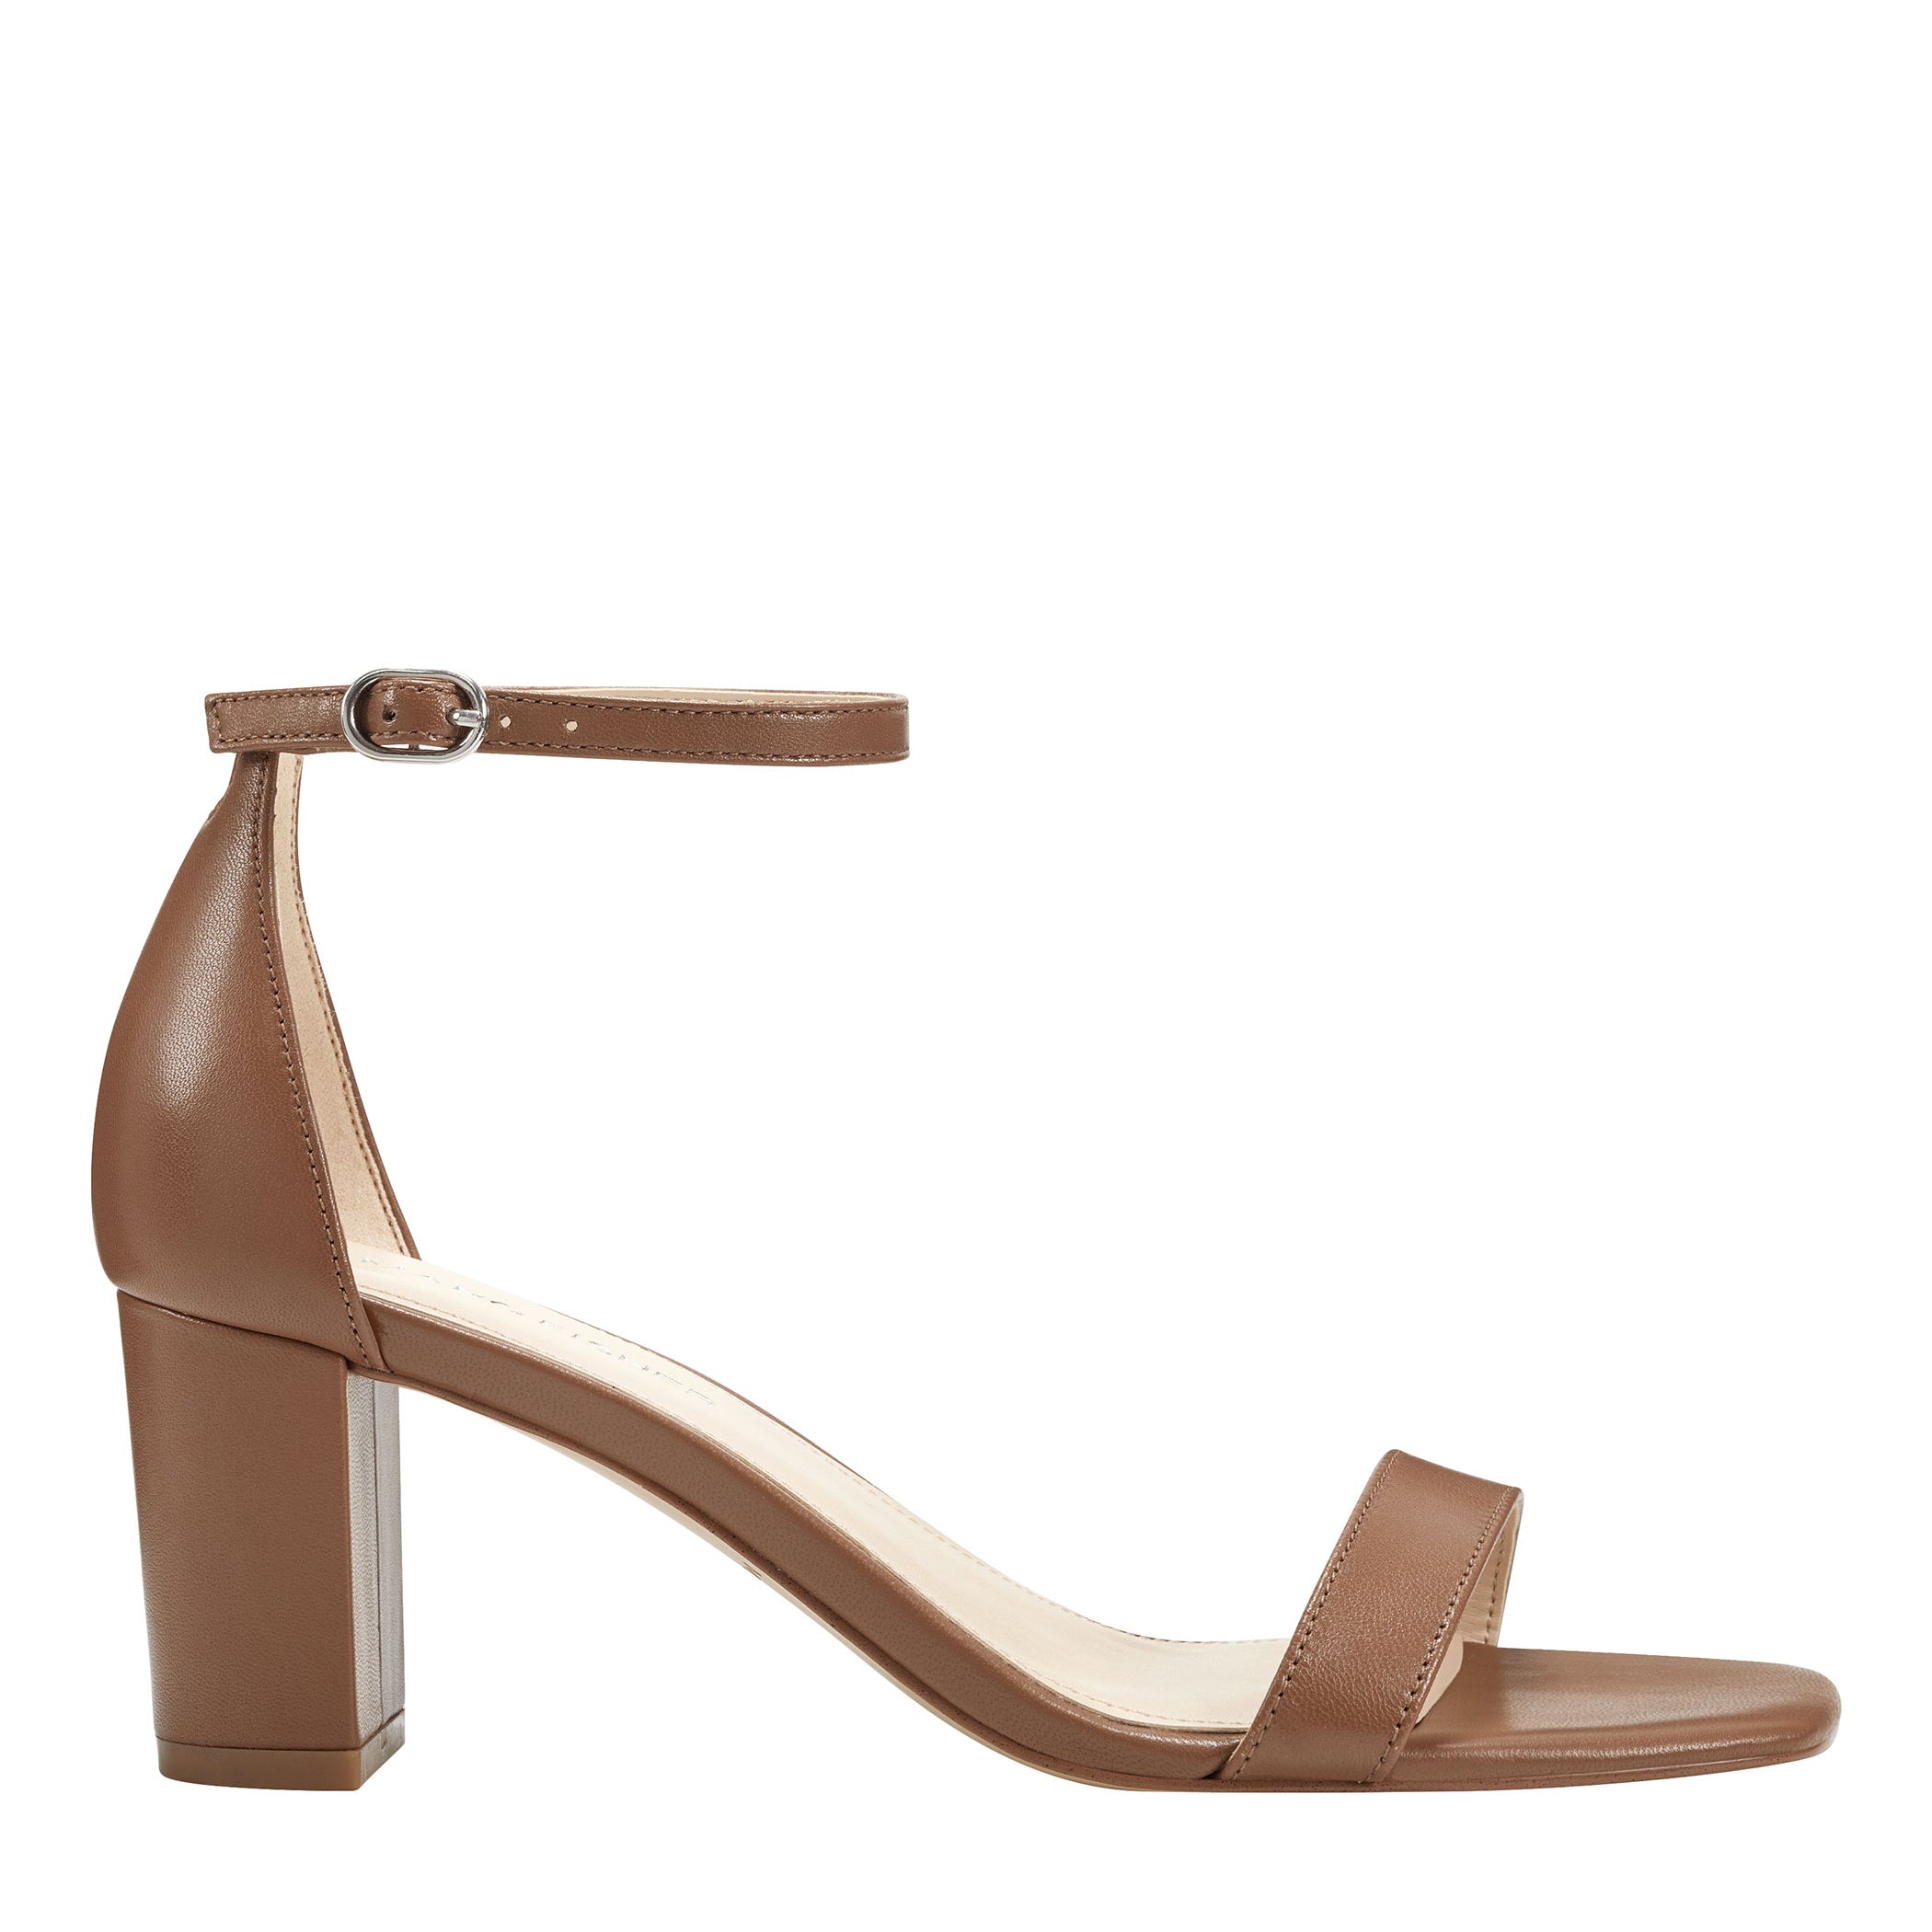 NEW The Row Rai Slingback Heeled Sandals, Hazel Brown, Size 36 | eBay